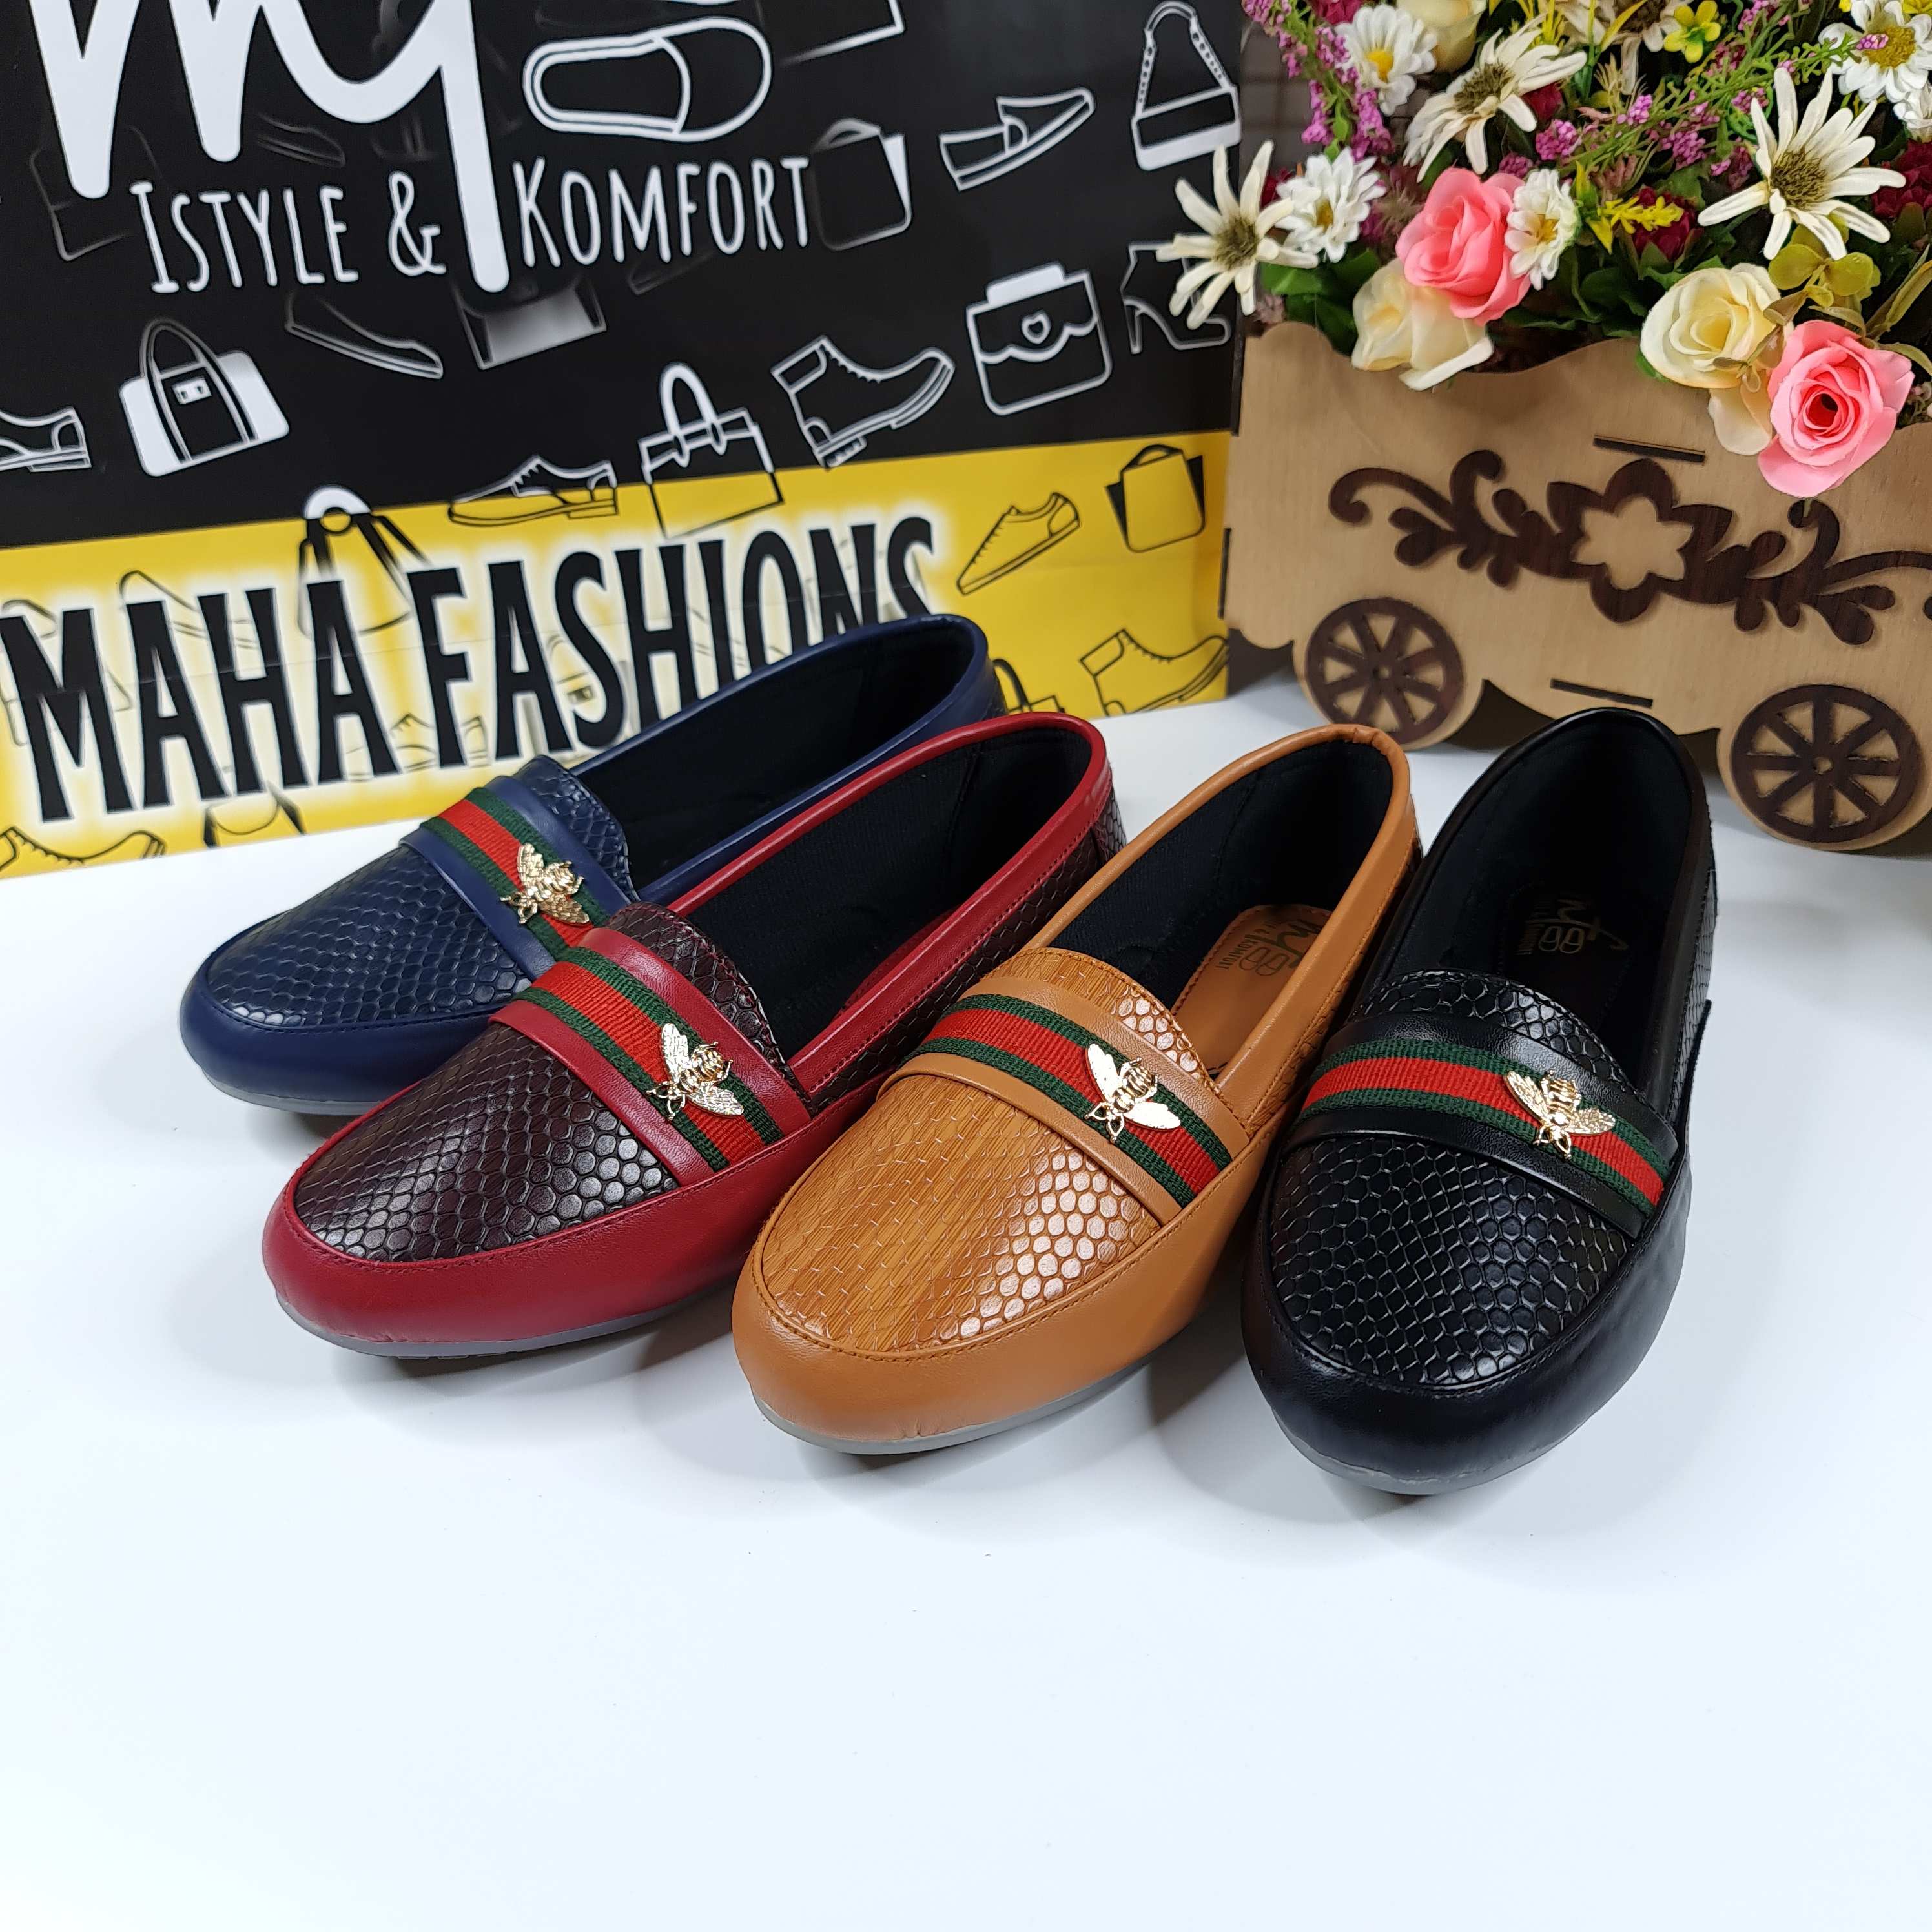 Rw-067 - Maha fashions -  